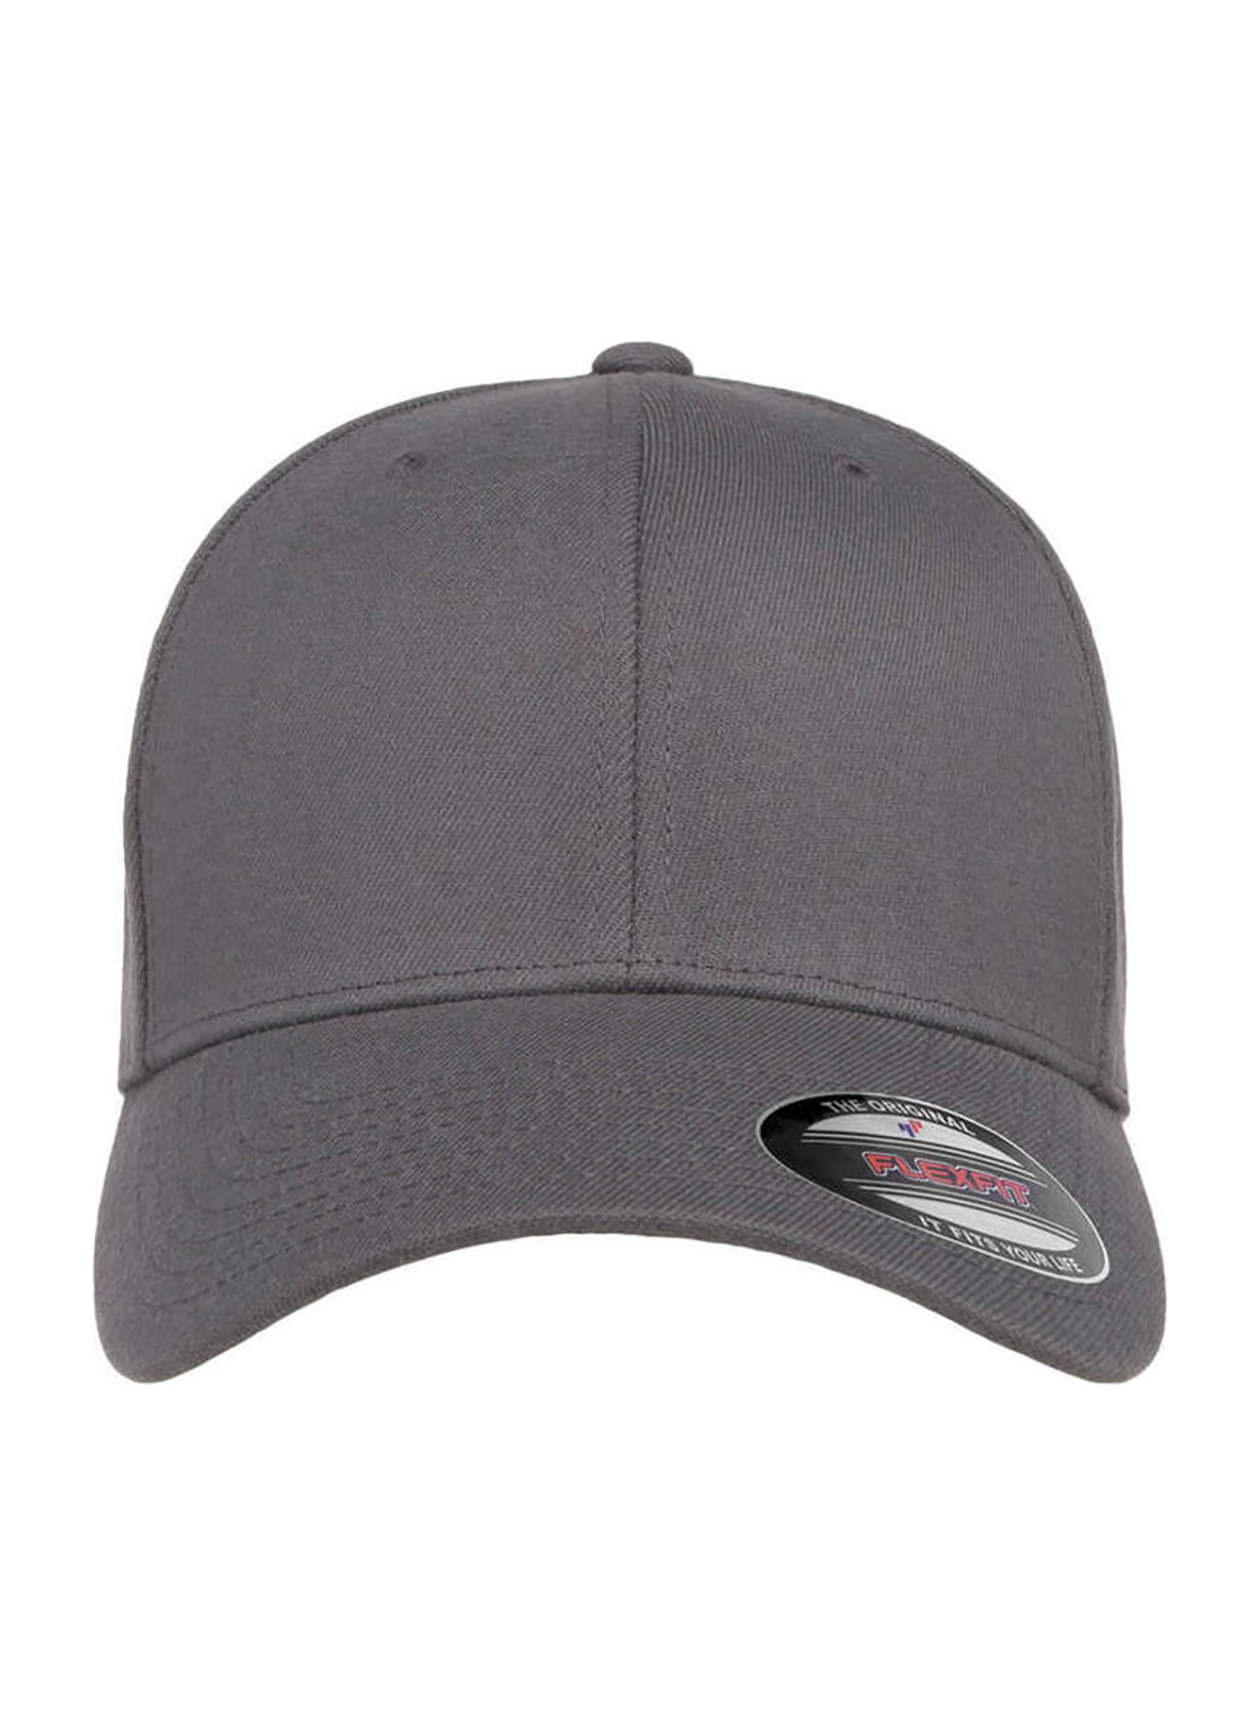 Grey Flexfit Wool Flexfit Blend | Hat